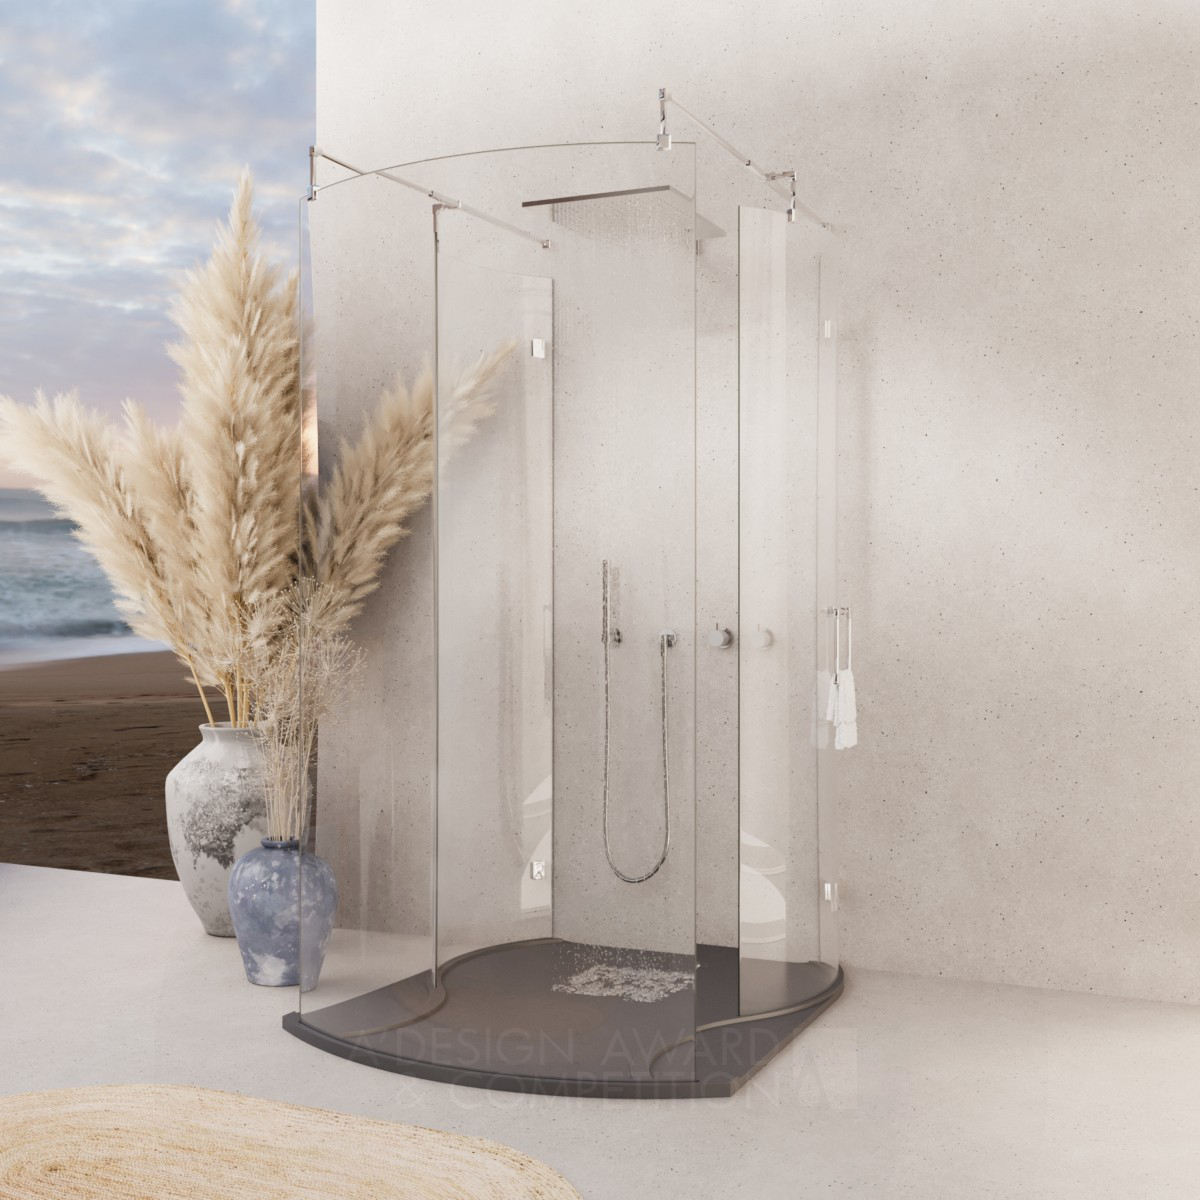 ARTEMIS wins Bronze at the prestigious A' Bathroom Furniture and Sanitary Ware Design Award with Outdoor Walk In Shower Enclosure Artemis Shower Enclosure.